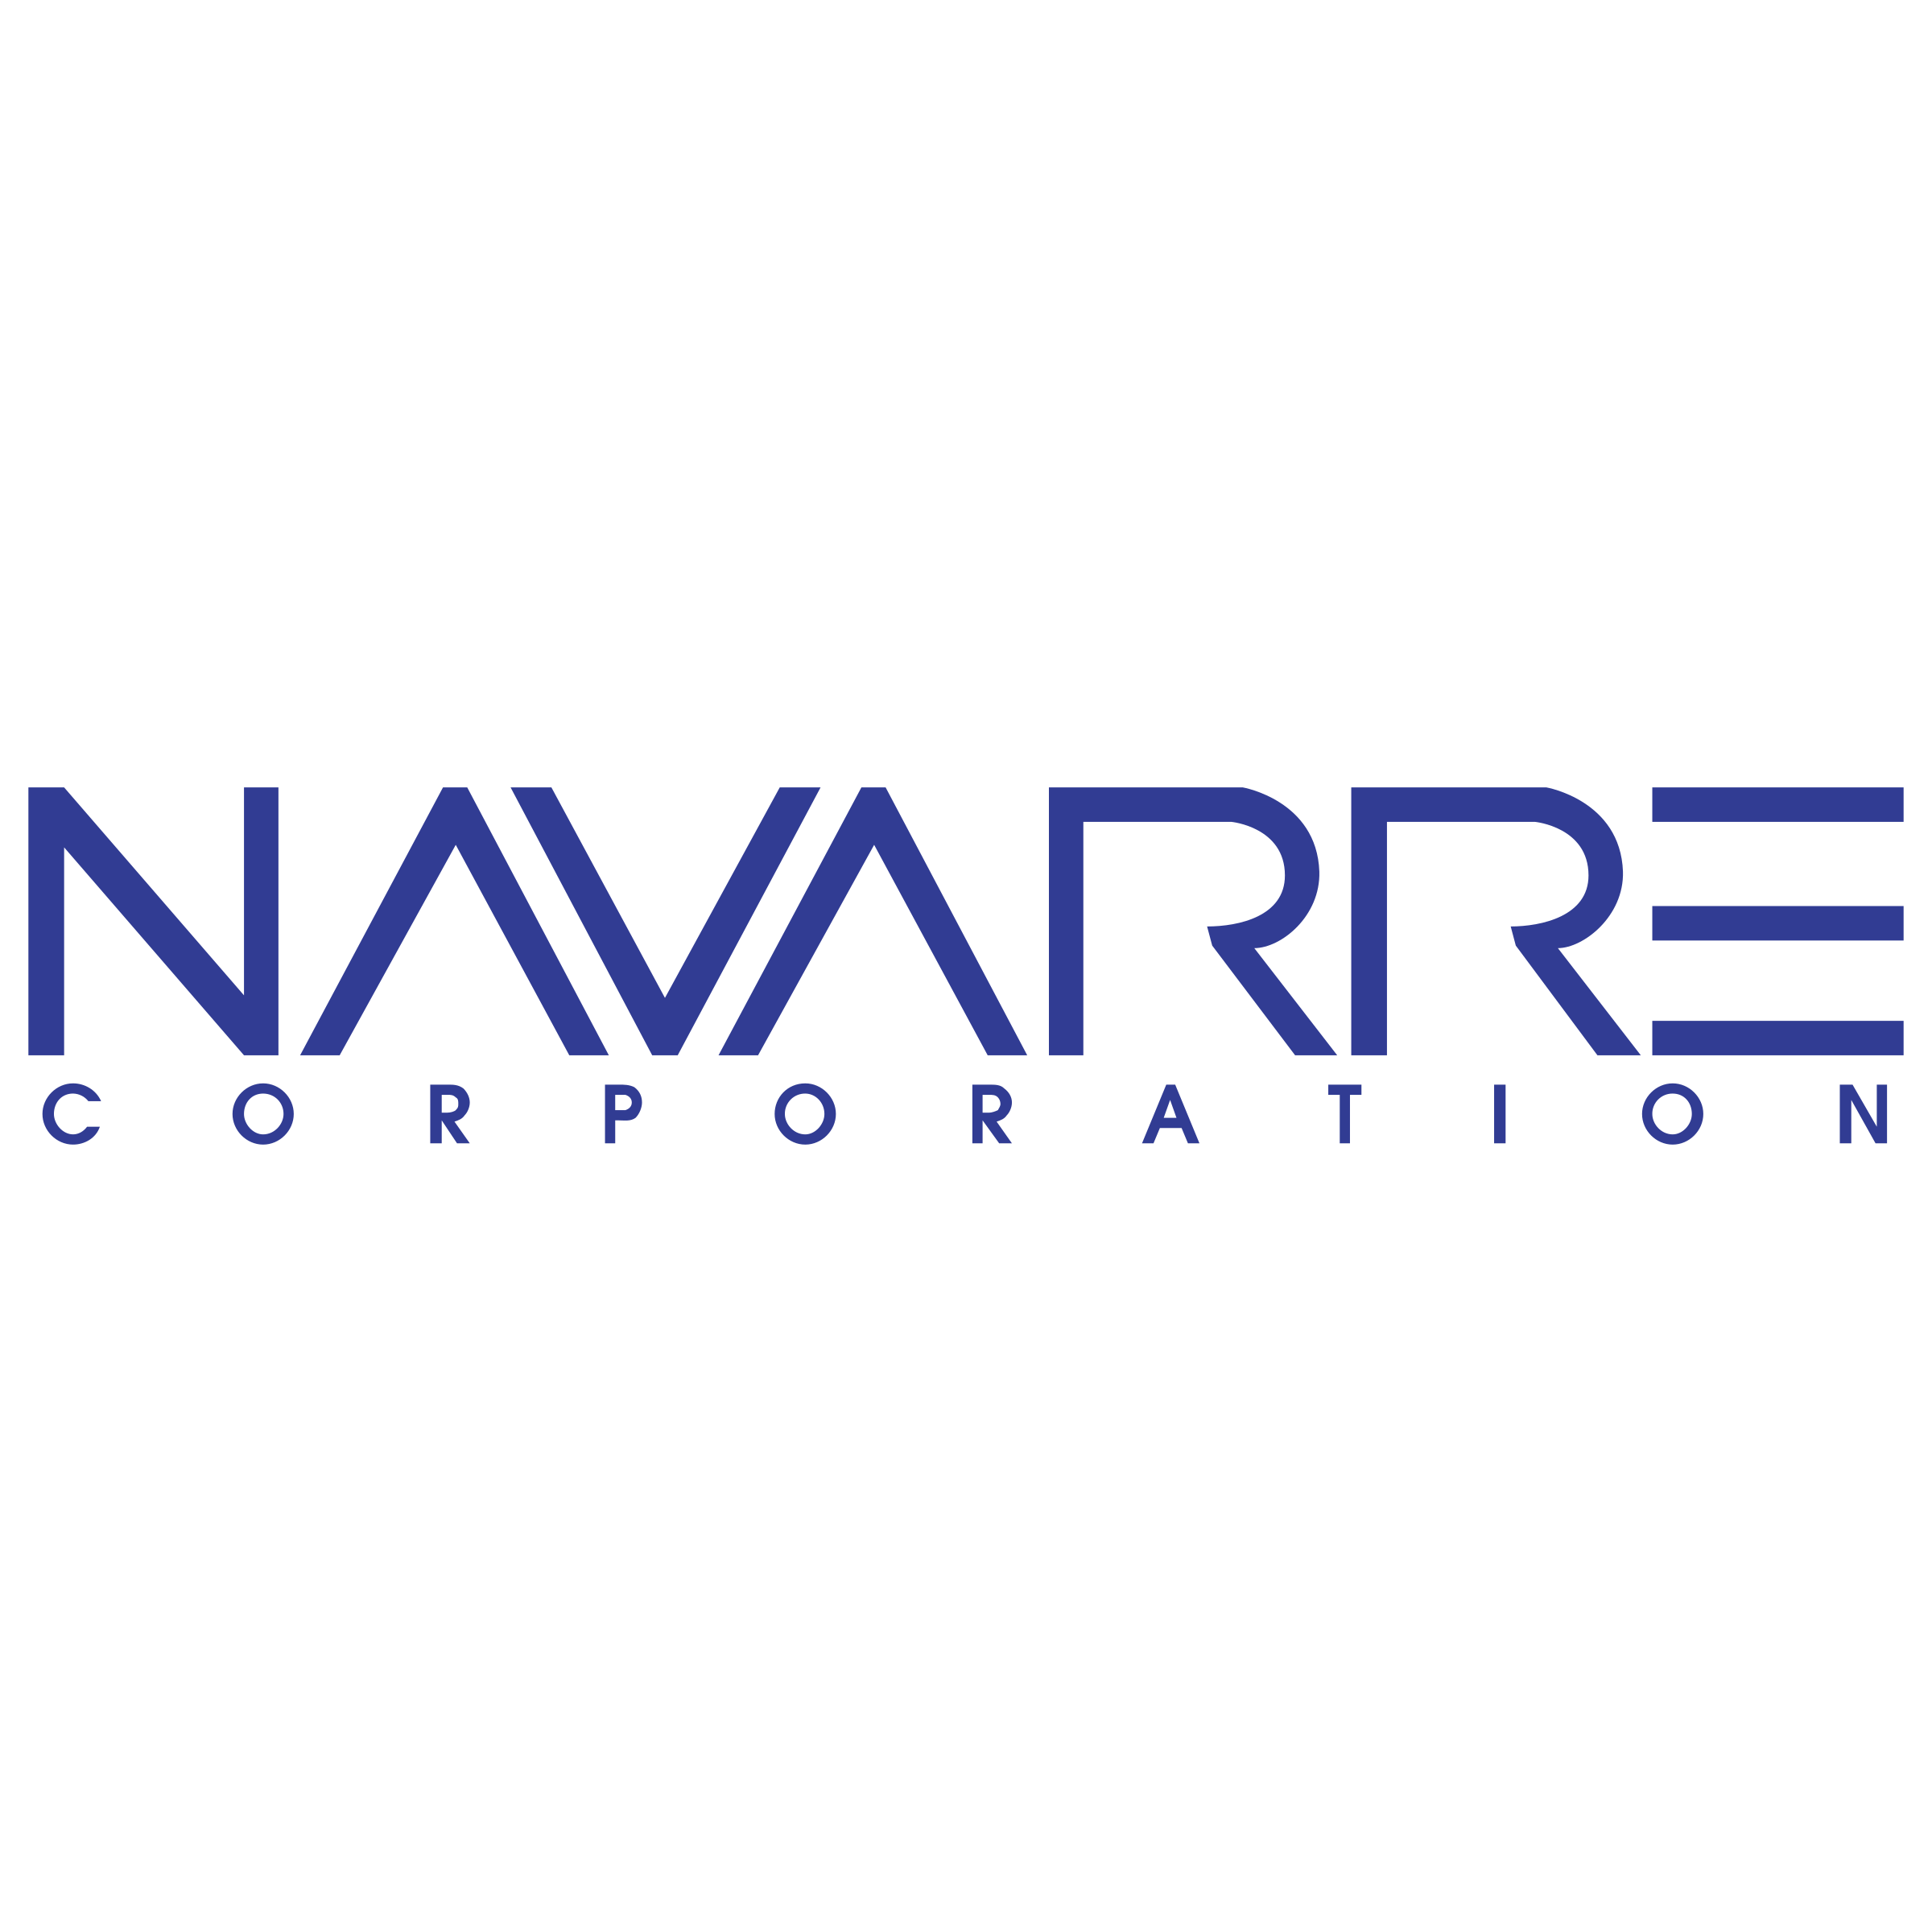 Navarre Logo - Navarre Logo PNG Transparent & SVG Vector - Freebie Supply